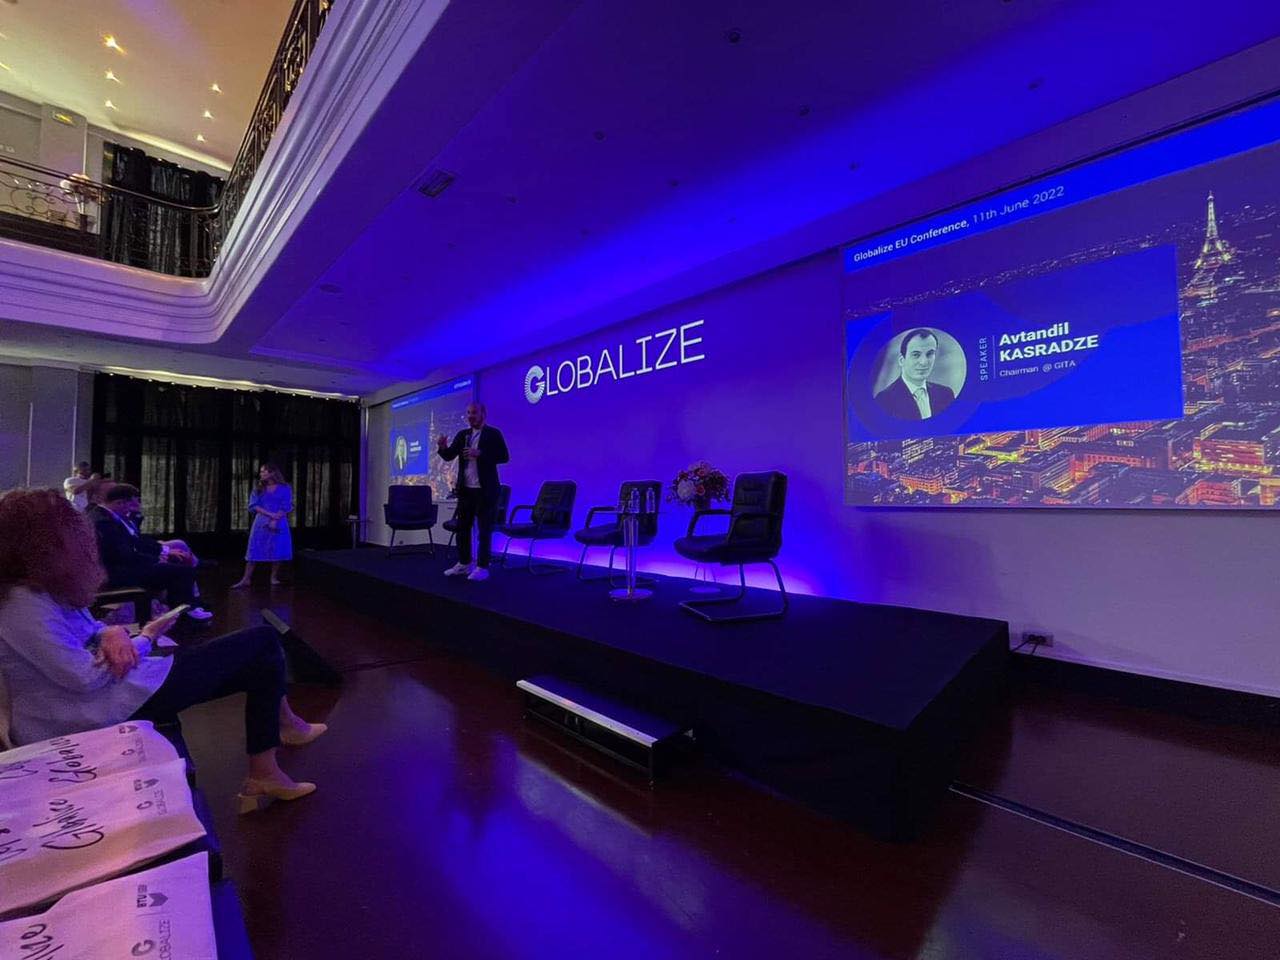 GITA – ს მხარდაჭერით GLOBALIZE – ის პირველი ევროპული კონფერენცია  პარიზში ჩატარდა